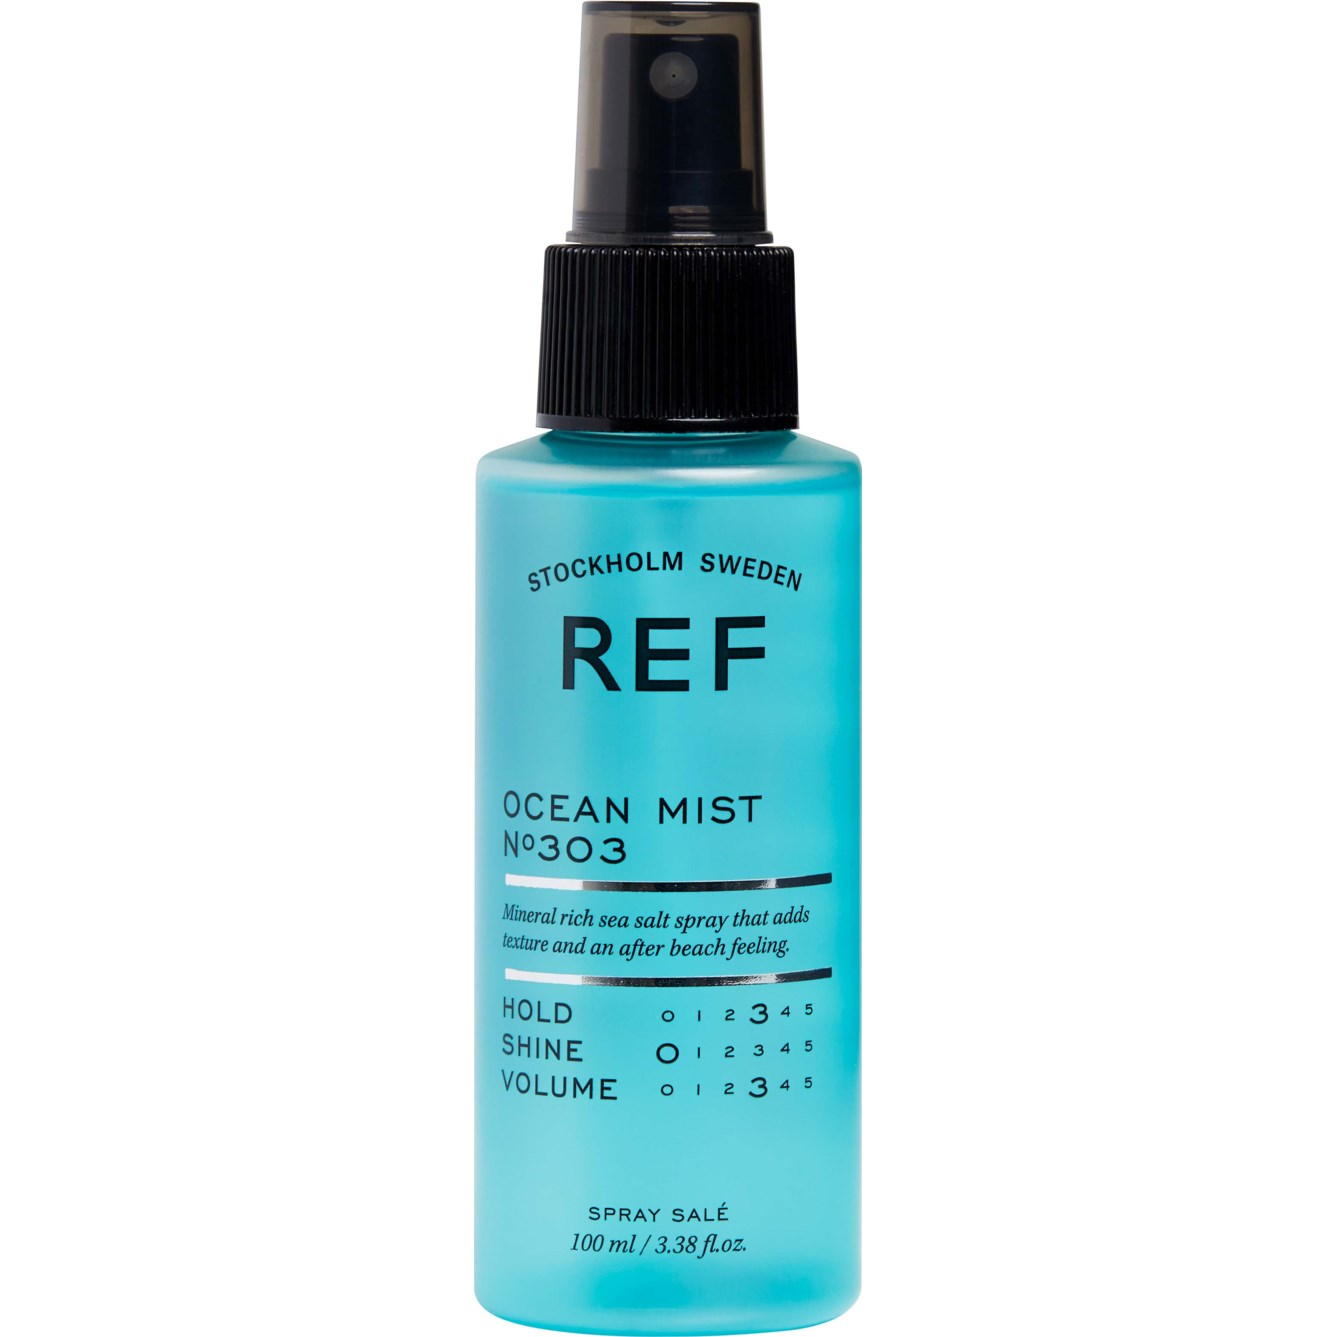 REF. Ocean Mist 100 ml